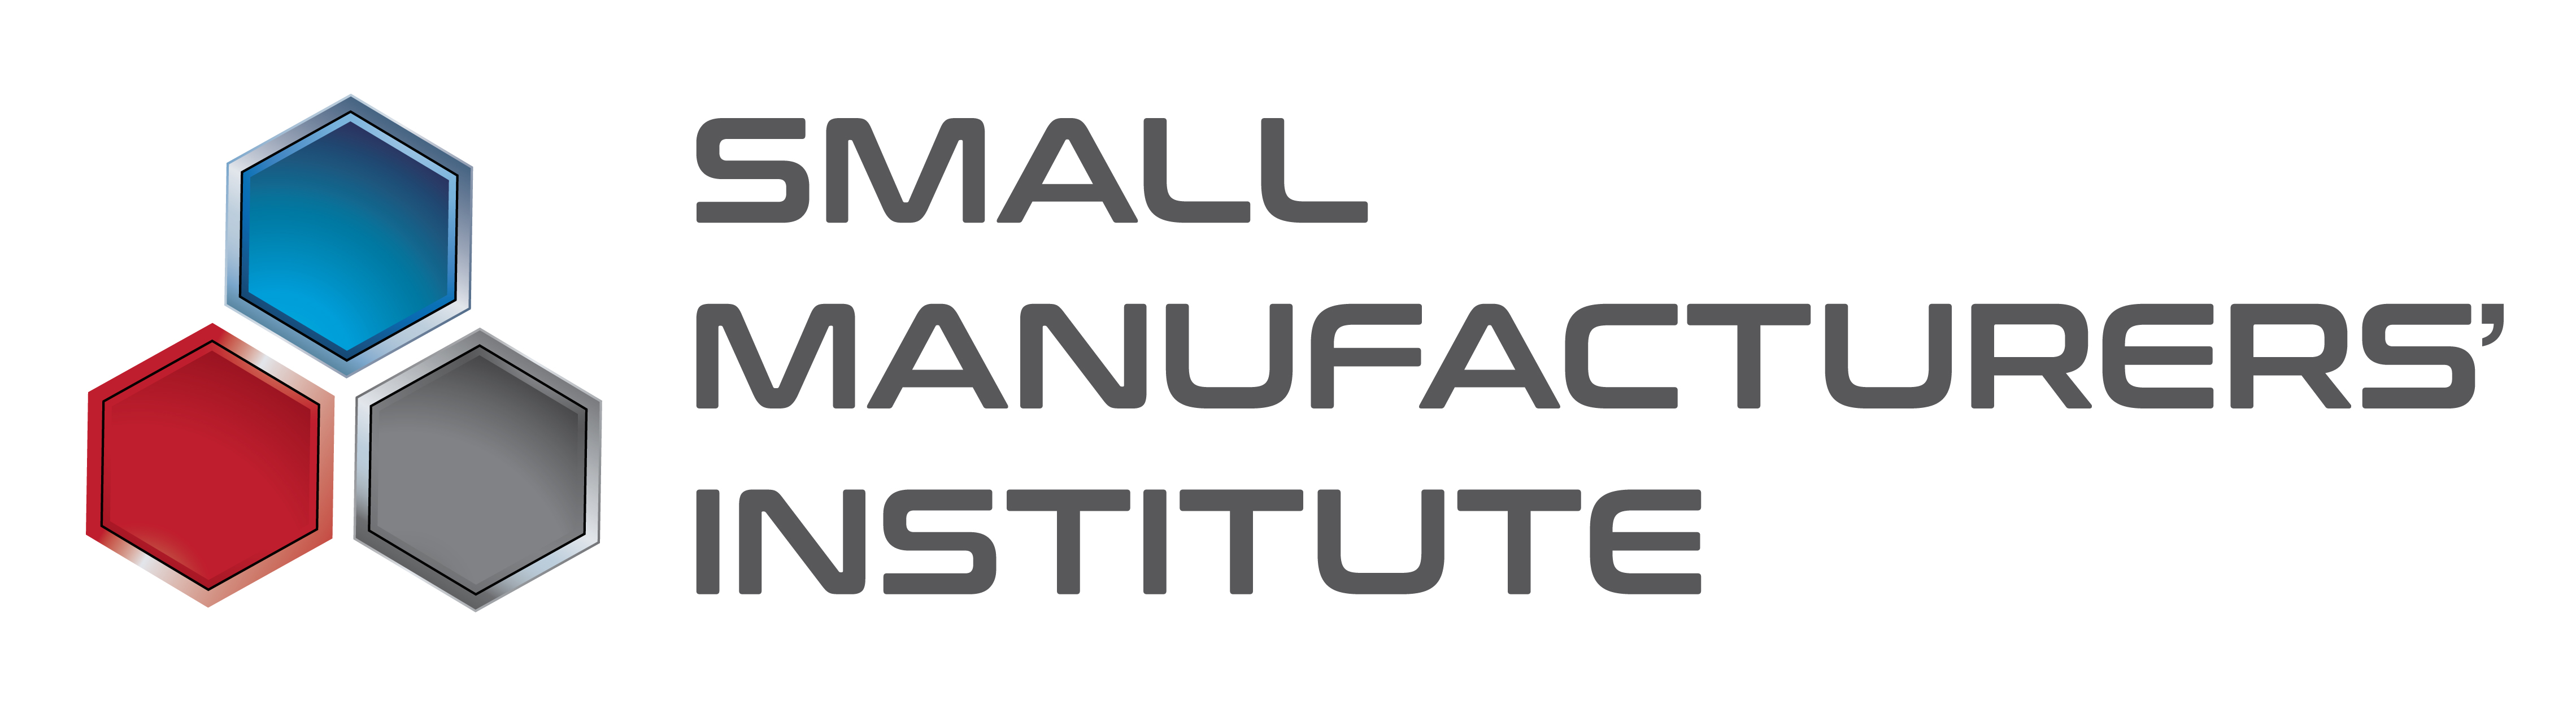 Small Manufacturers Institute